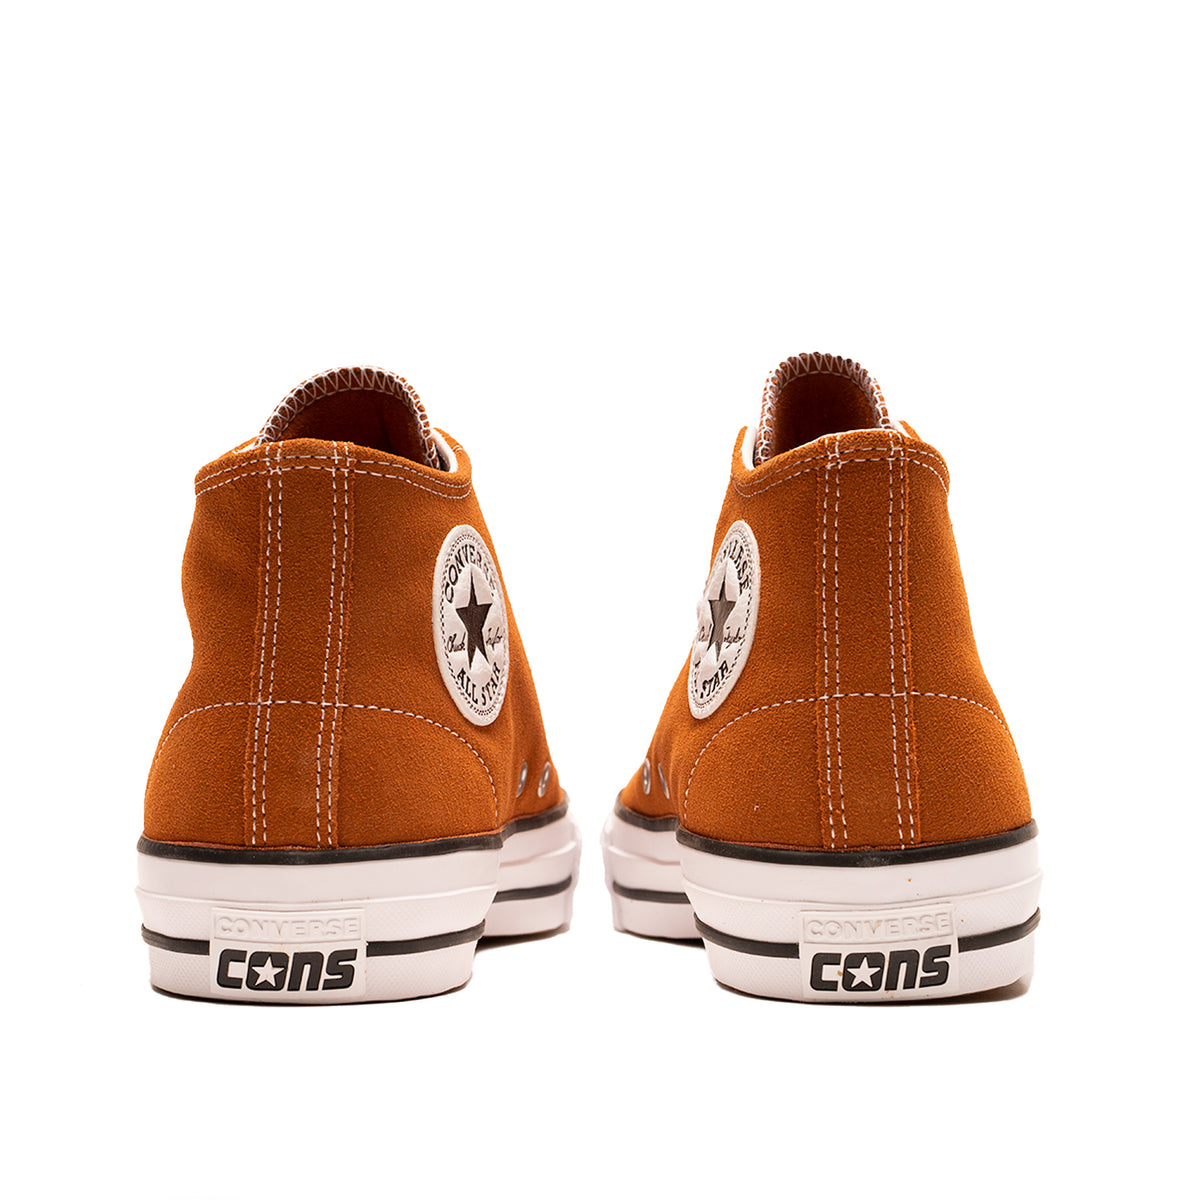 Converse CTAS Pro Mid Tawny Owl/White/Black